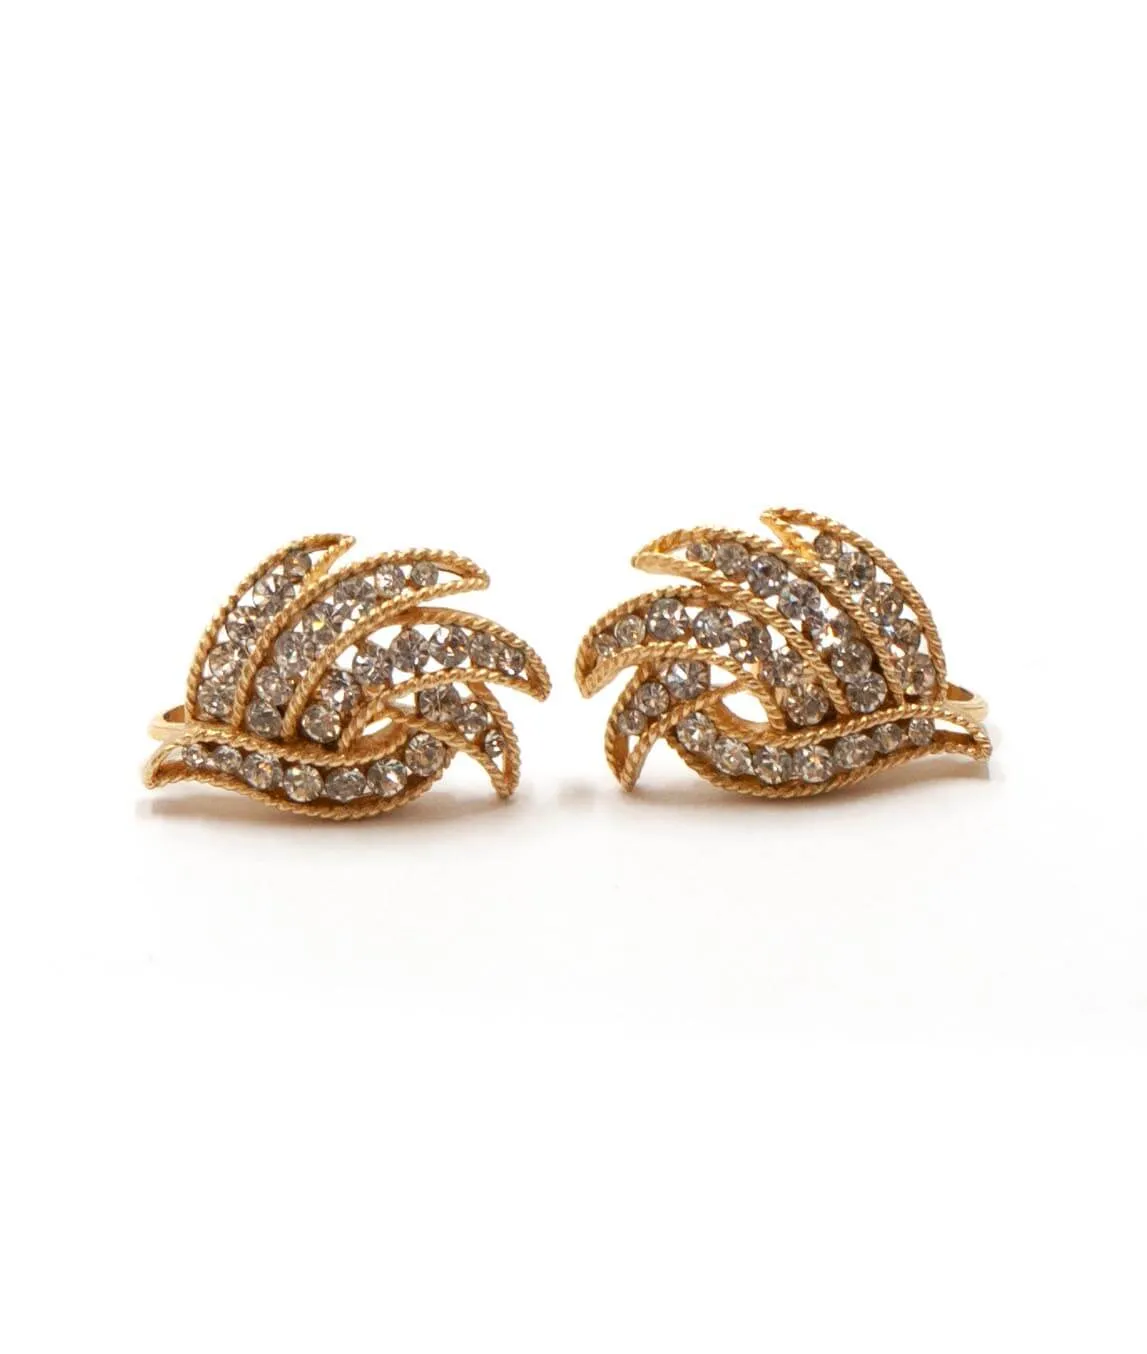 Crown Trifari crystal and gold leaf earrings